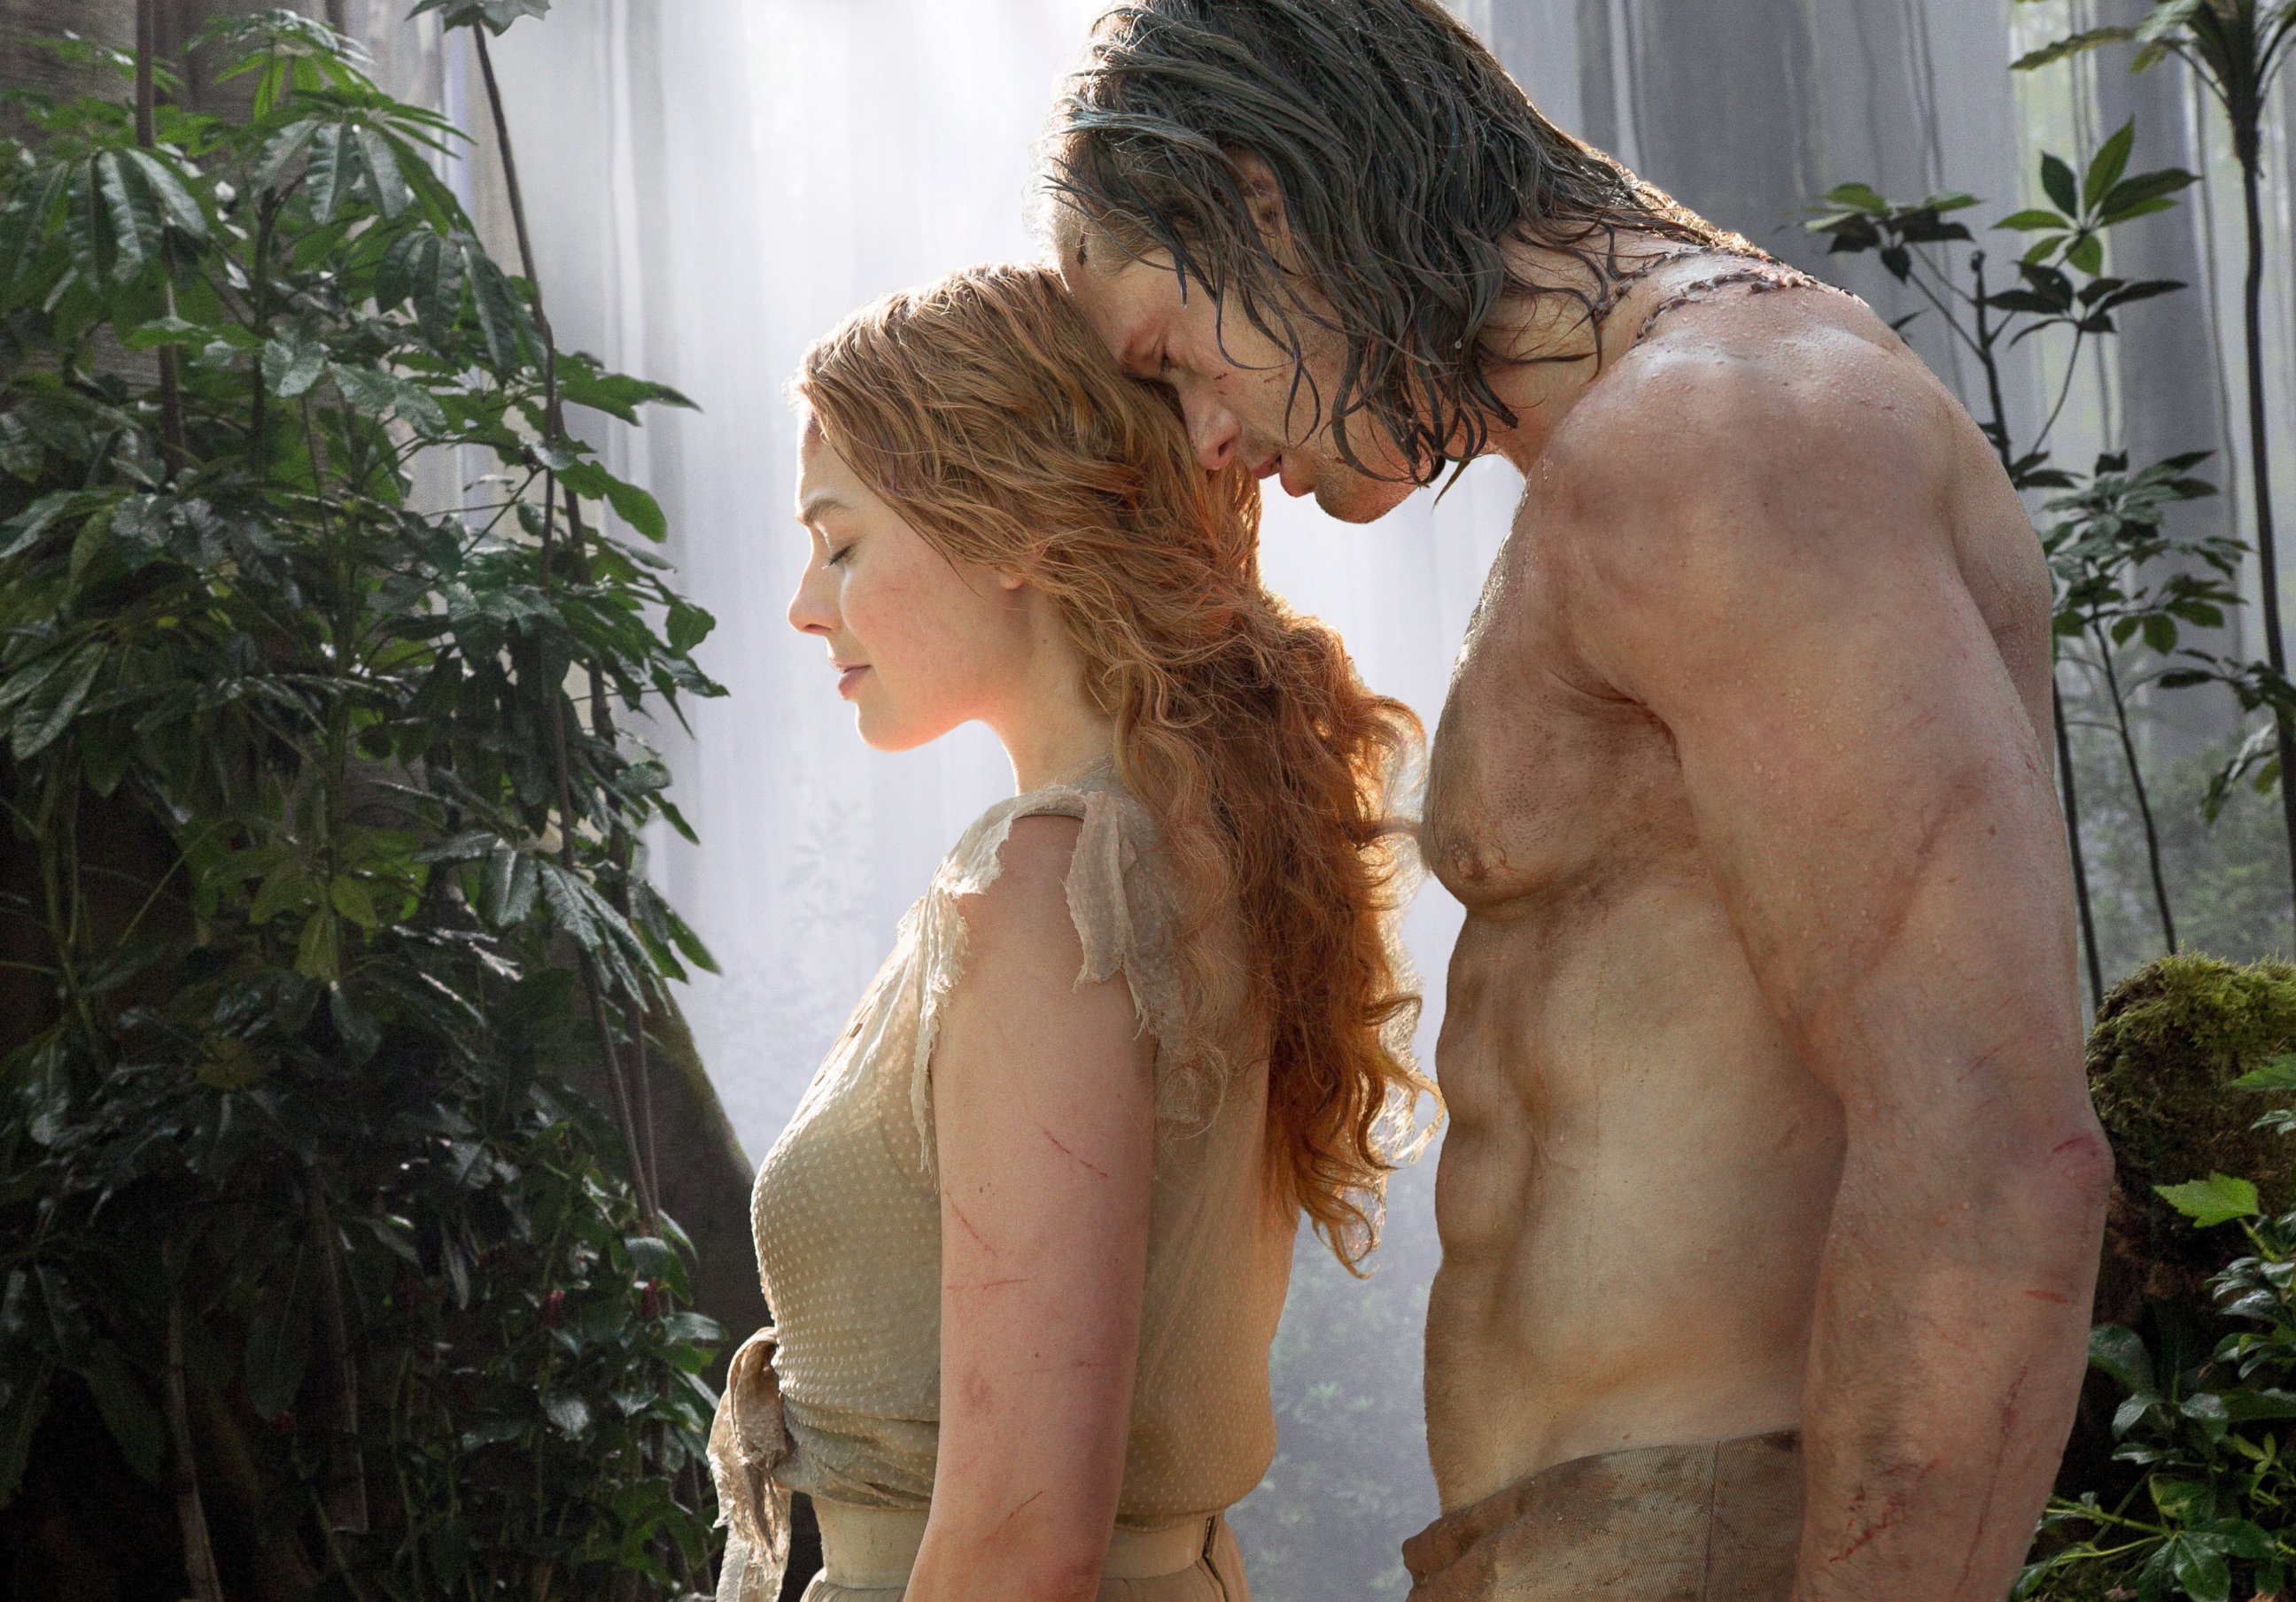 Tarzan Rape Xxx - The Legend of Tarzan' Star Alexander Skarsgard Talks Iconic Role - ABC News